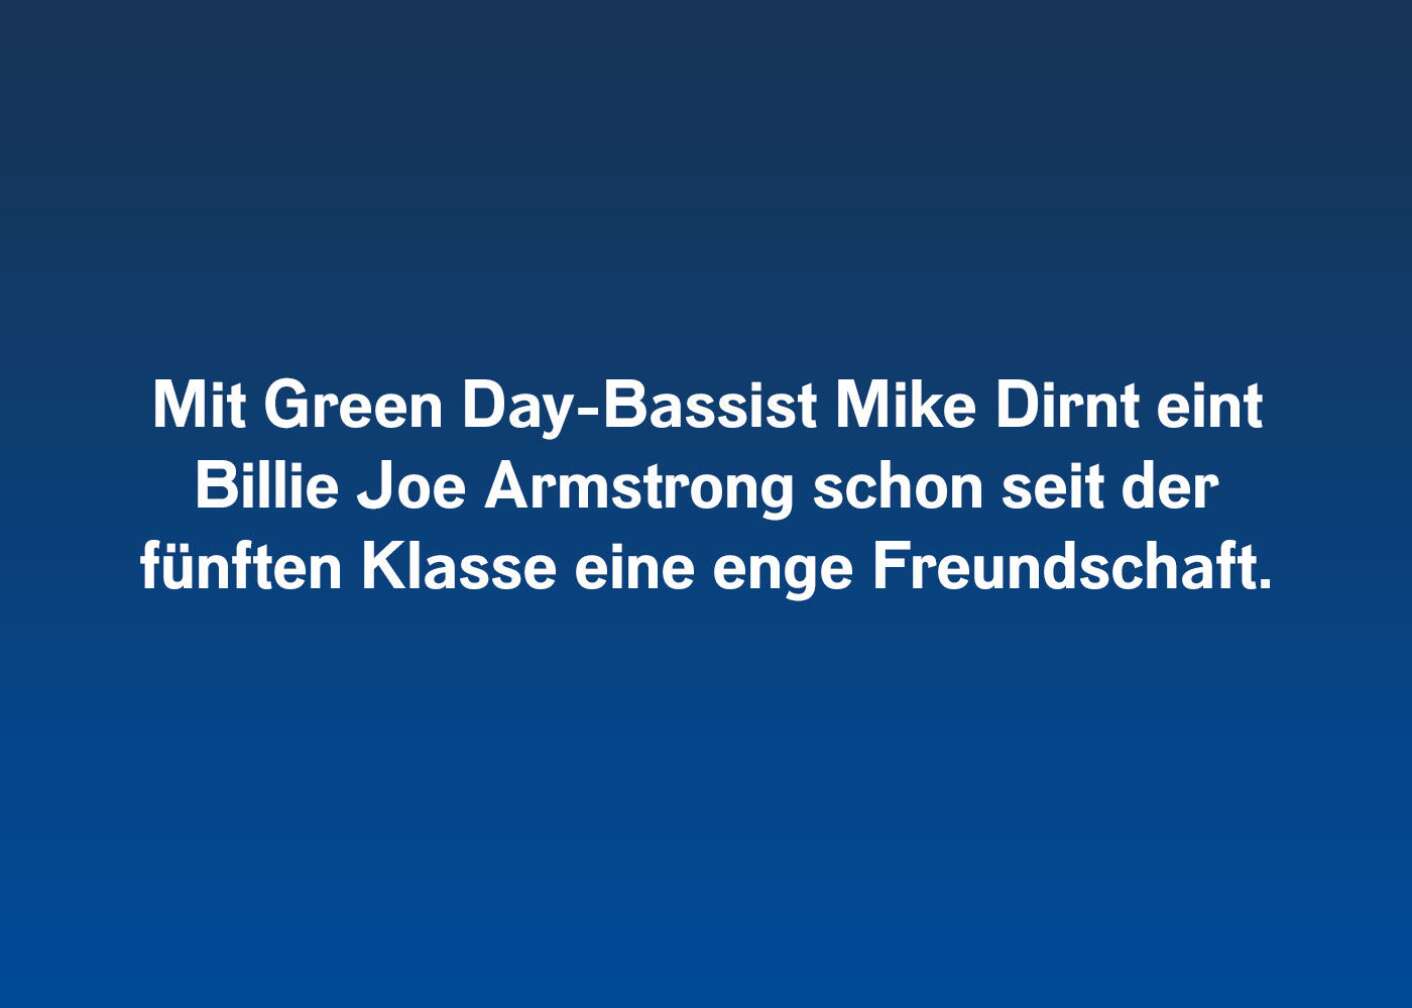 Fakt über Billie Joe Armstrong als Fließtext